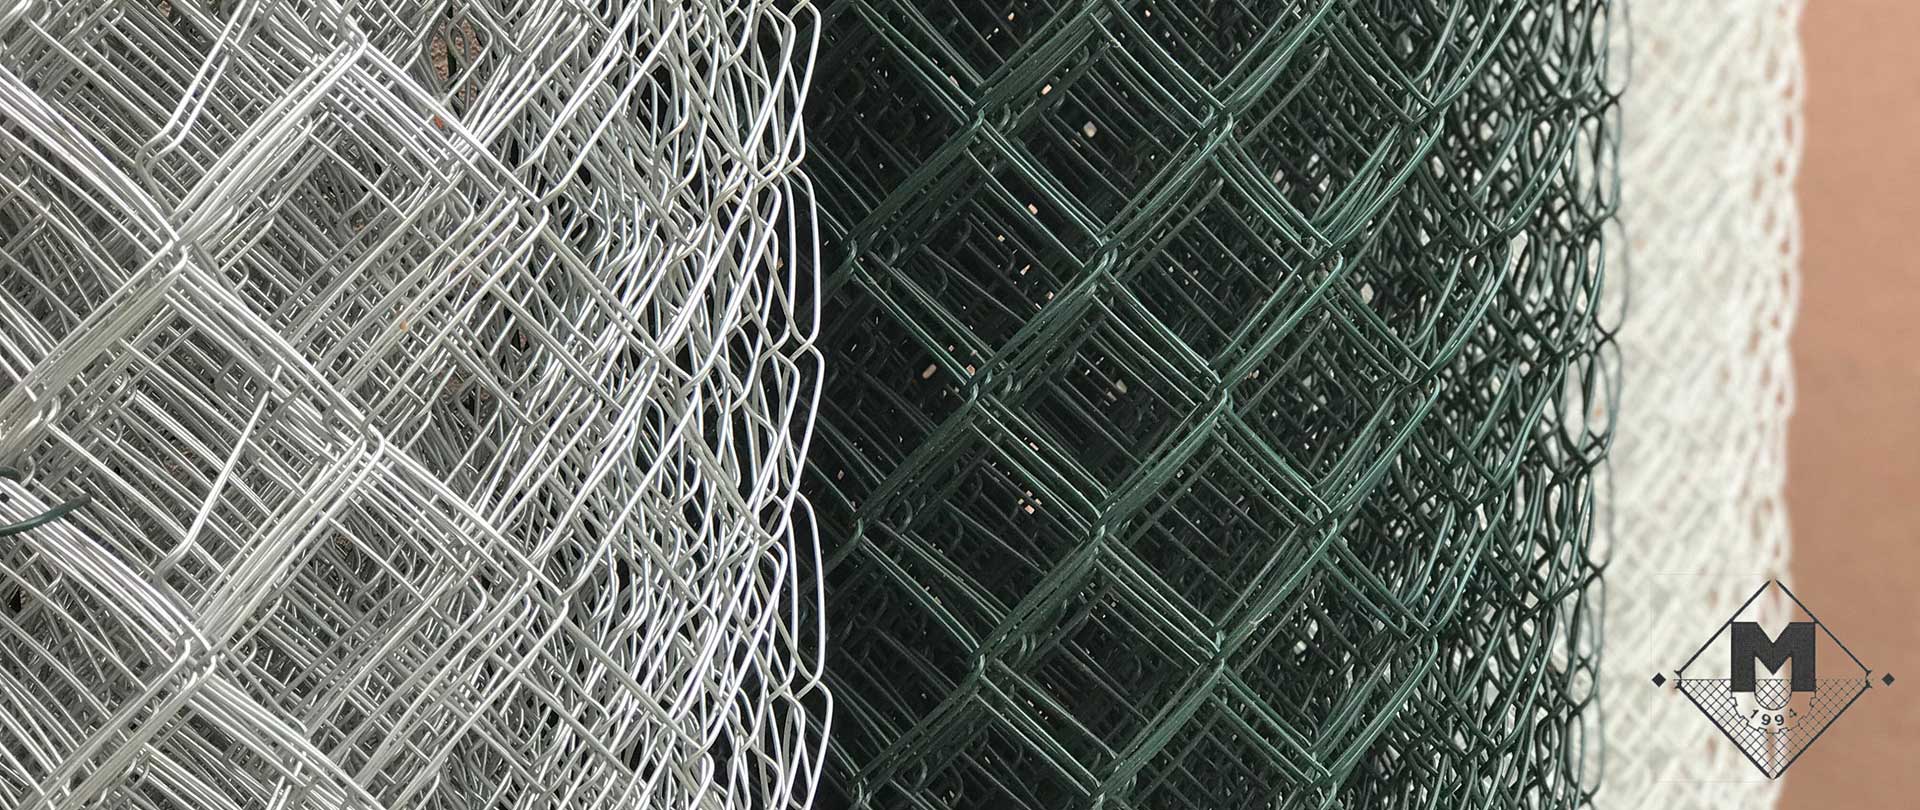 Galvanized and plasticized universal mesh